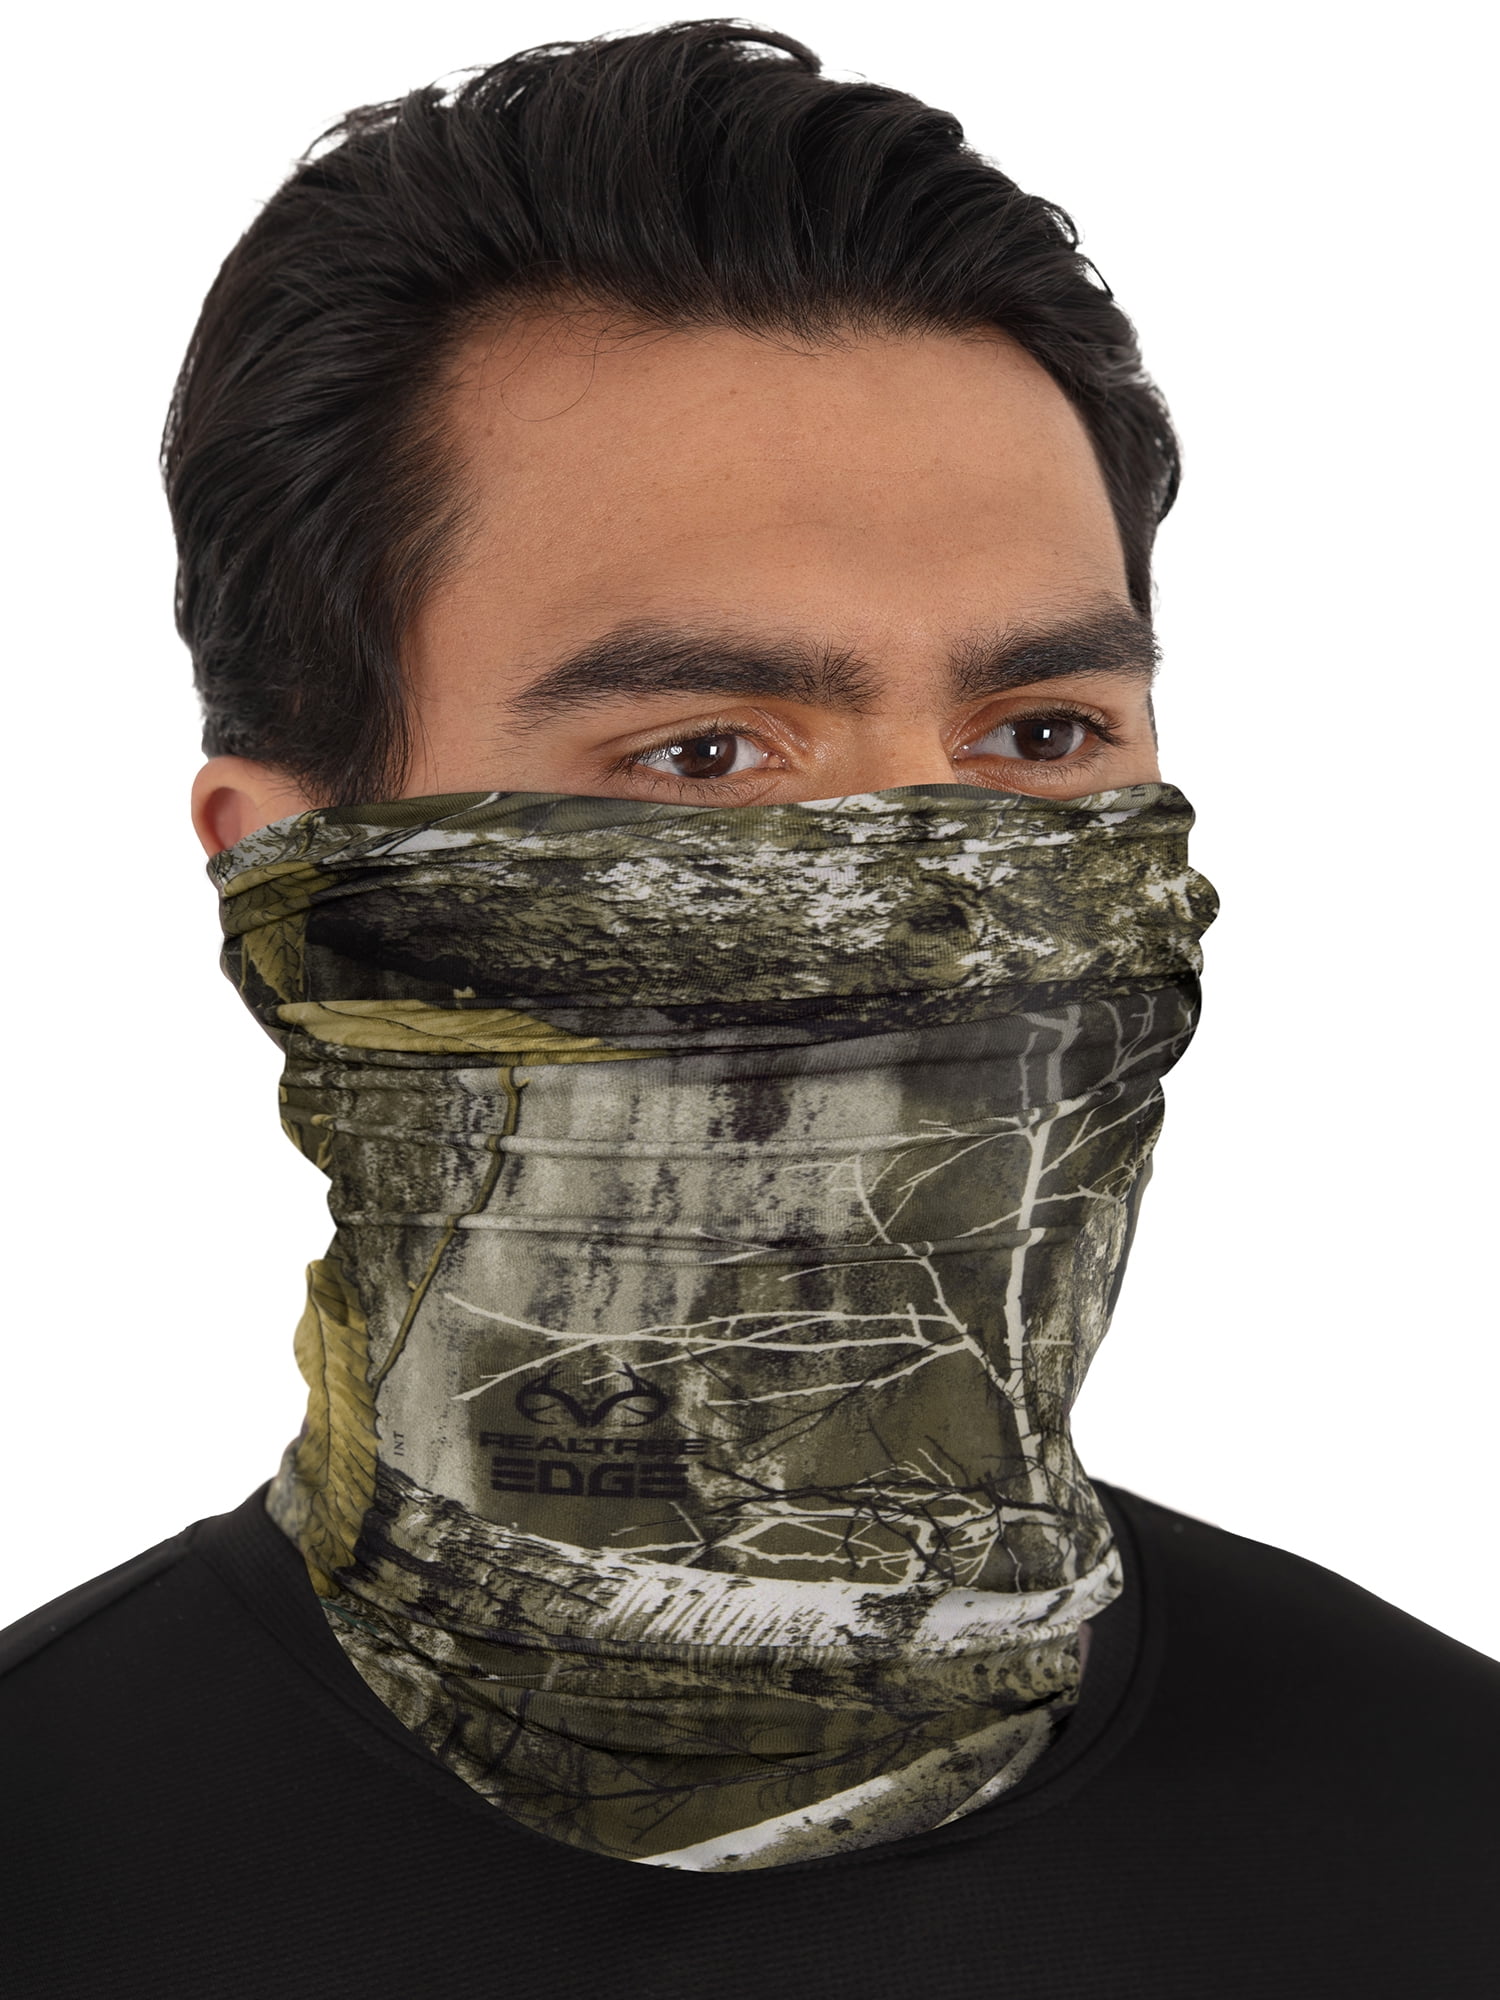 Buff Neck Gaiter Balaclava Mask.protect indoor/outdoor 8-bit Camo Face Shield 